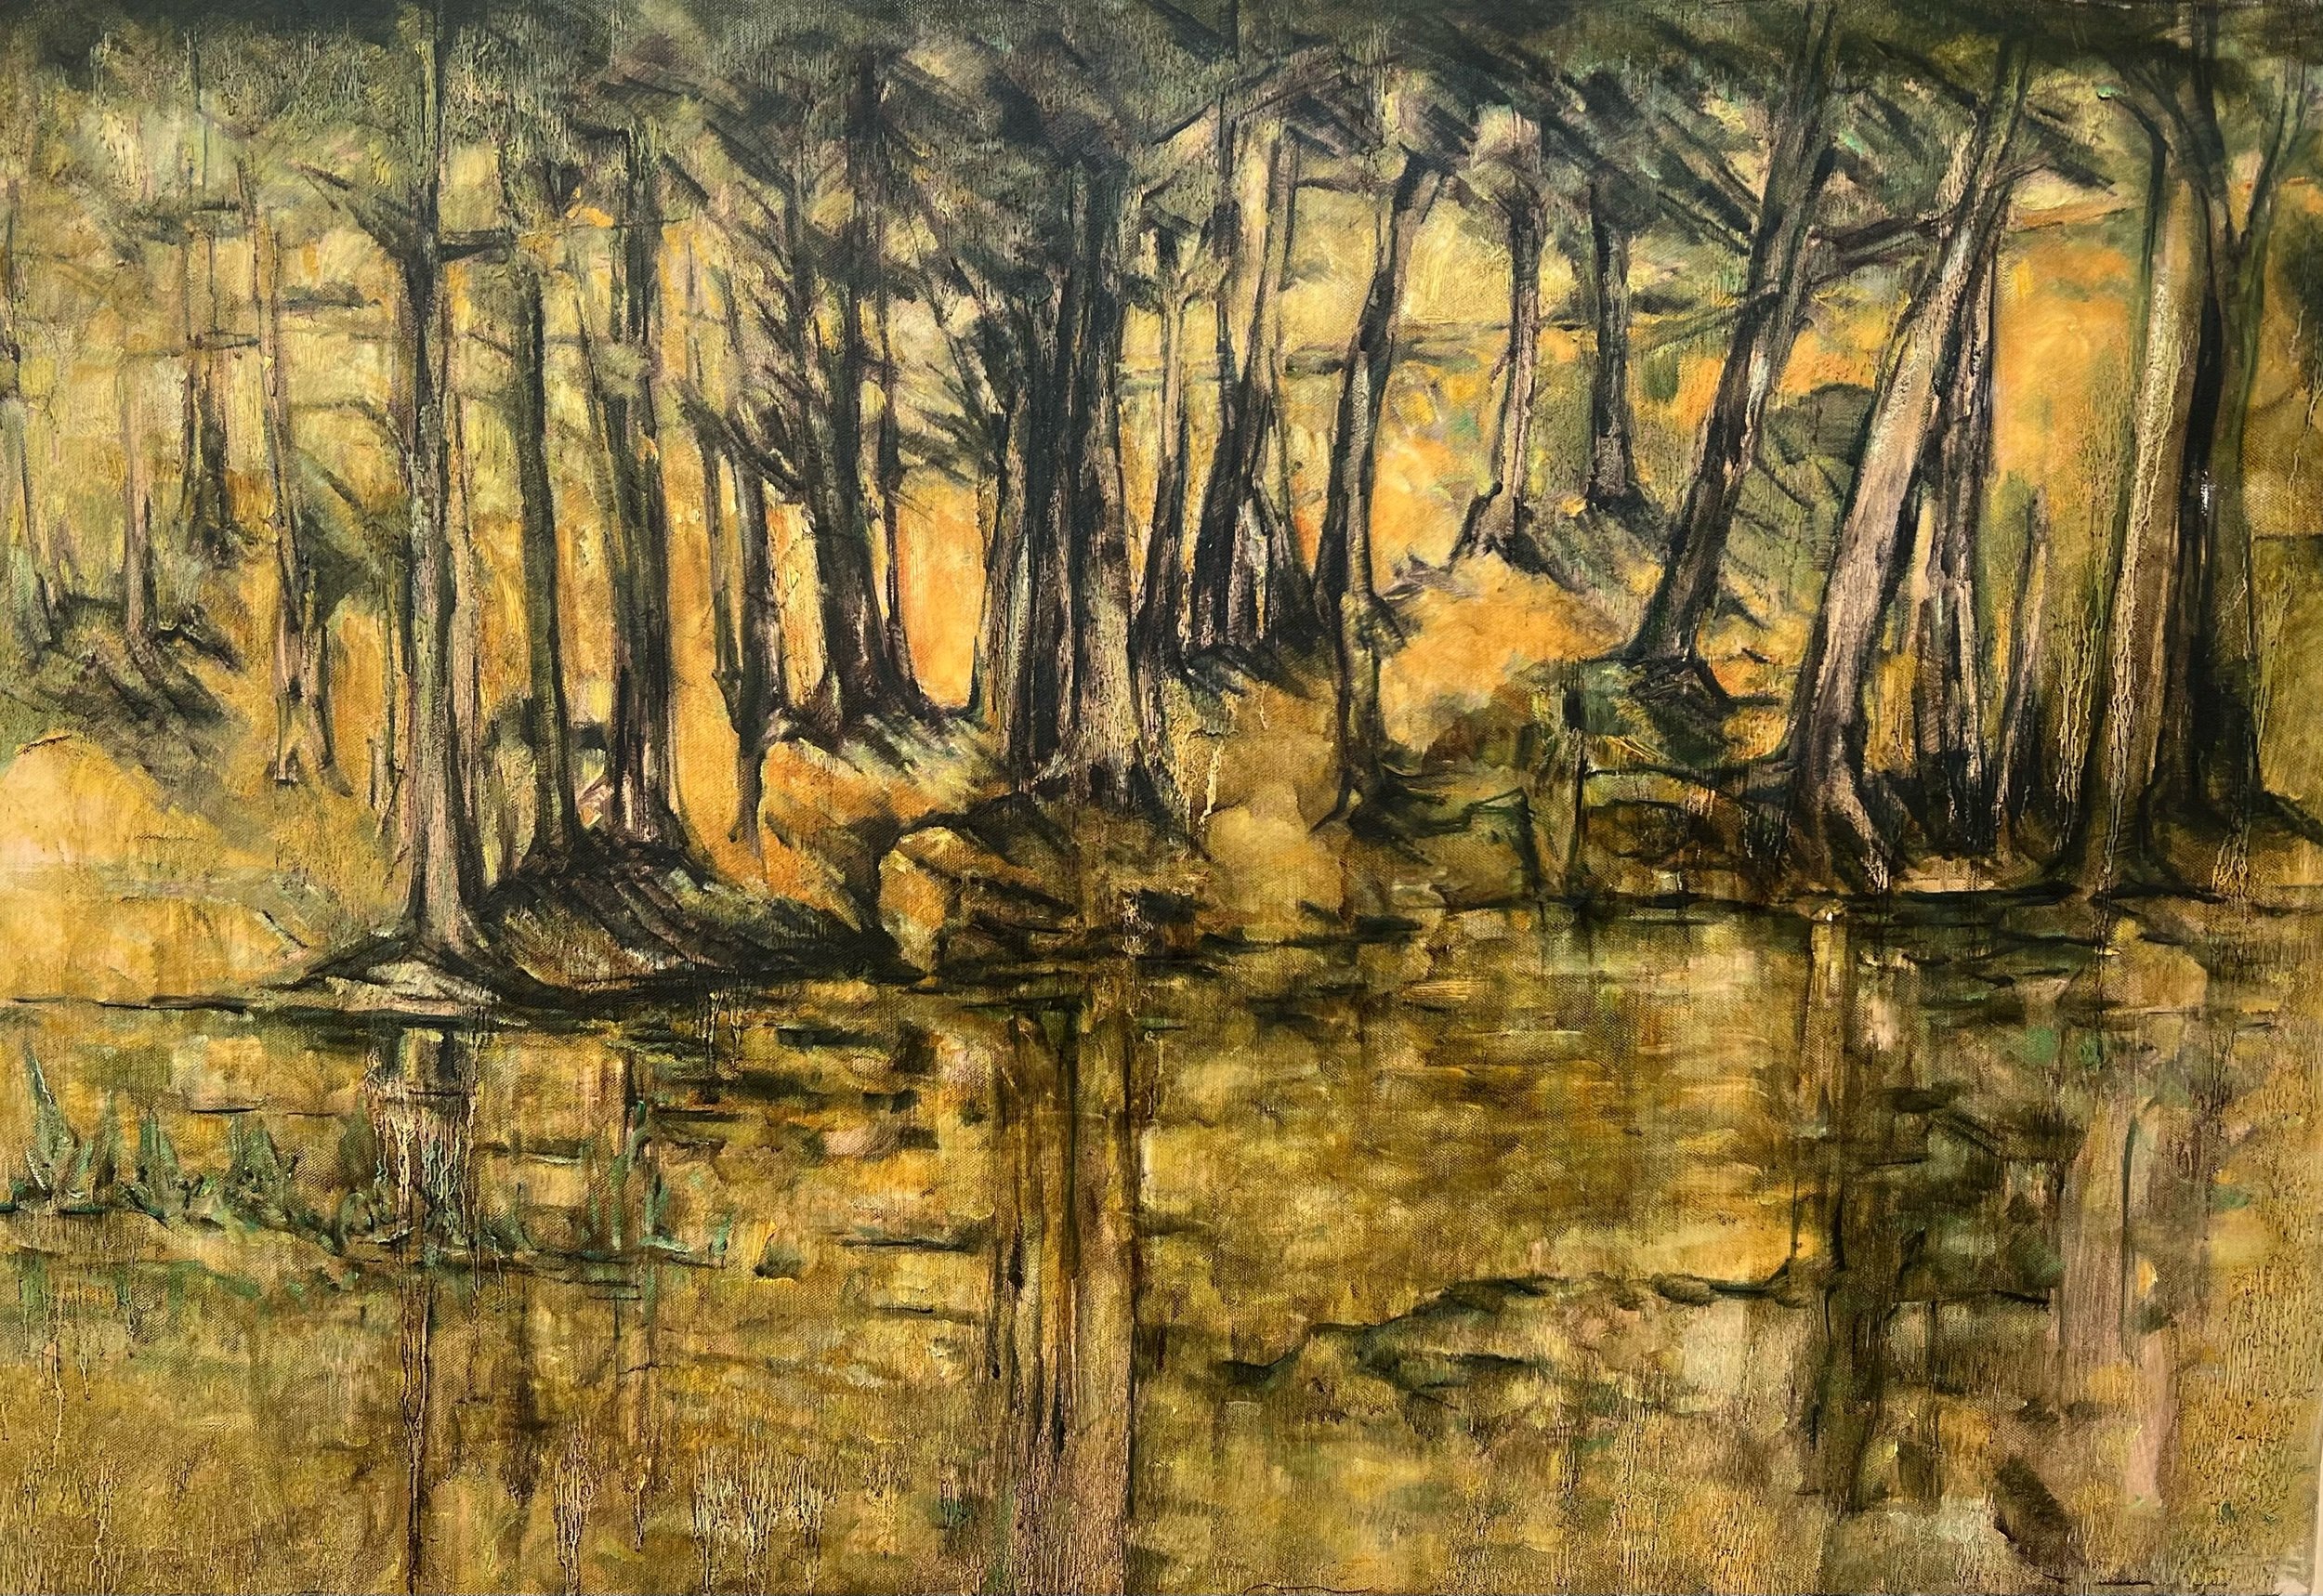 Wood Panel Series 3 (the pond)